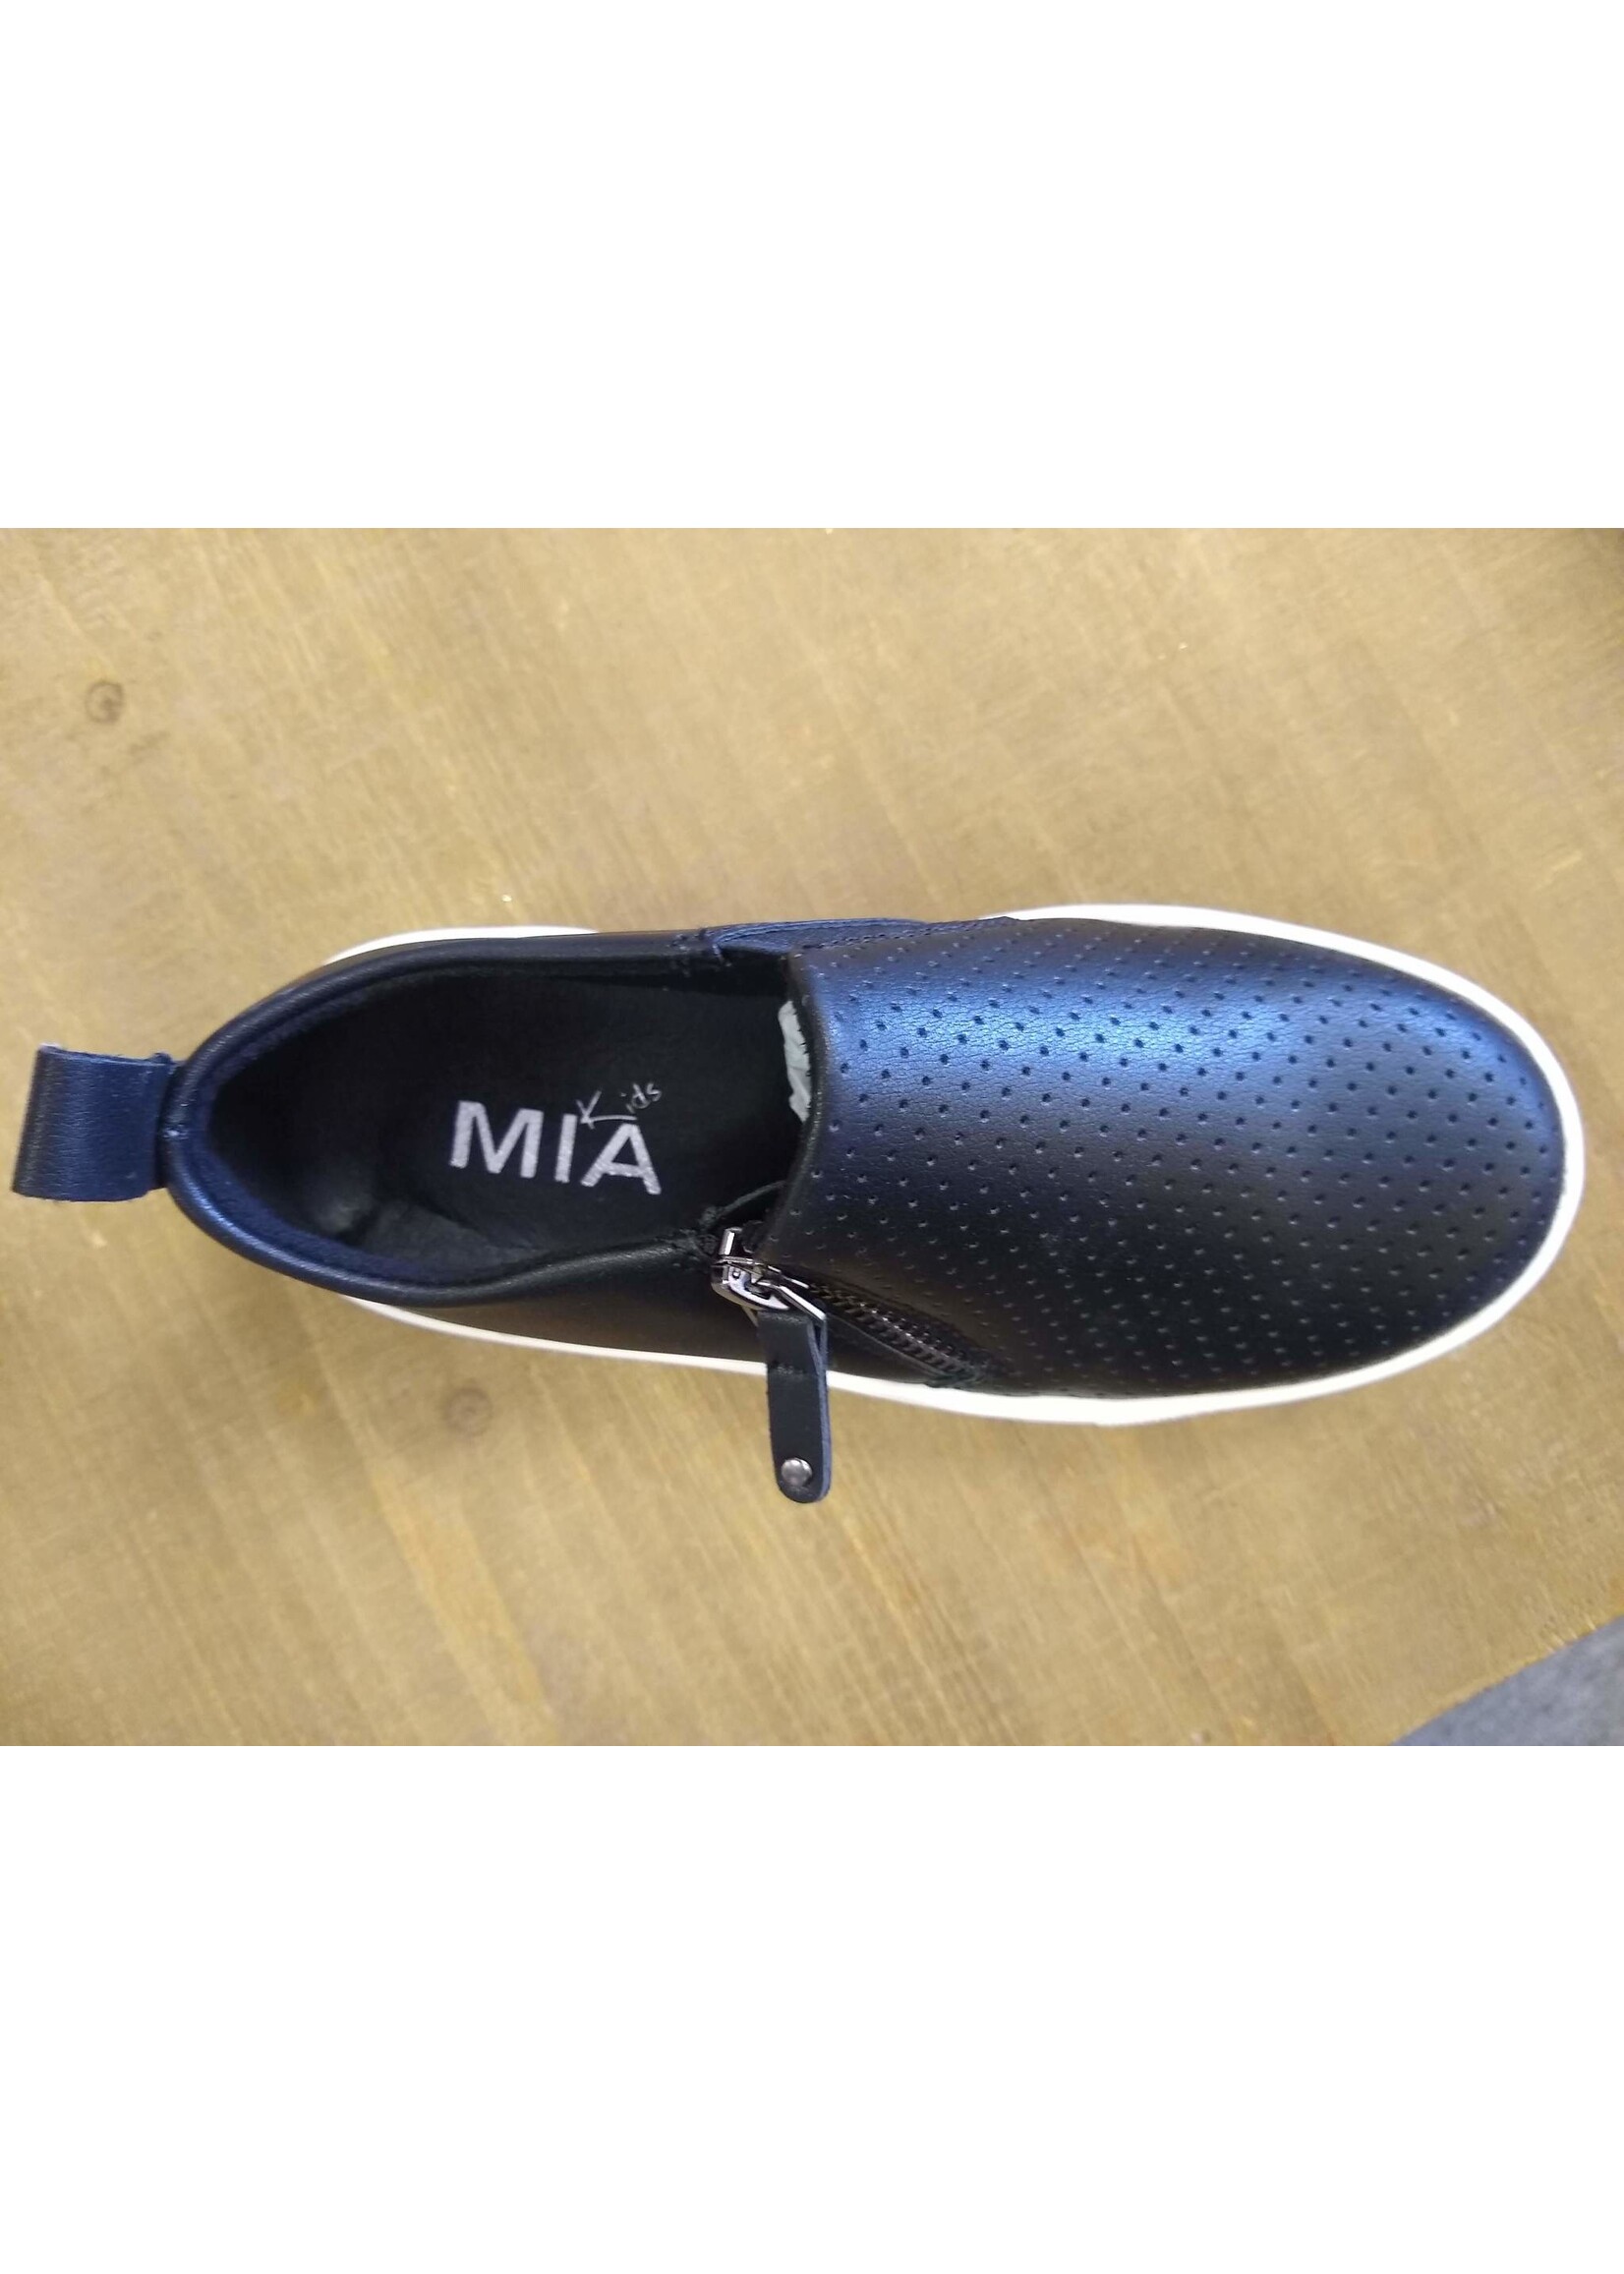 Mia Shoes Andraya Black Sneaker by Mia Kids Tween